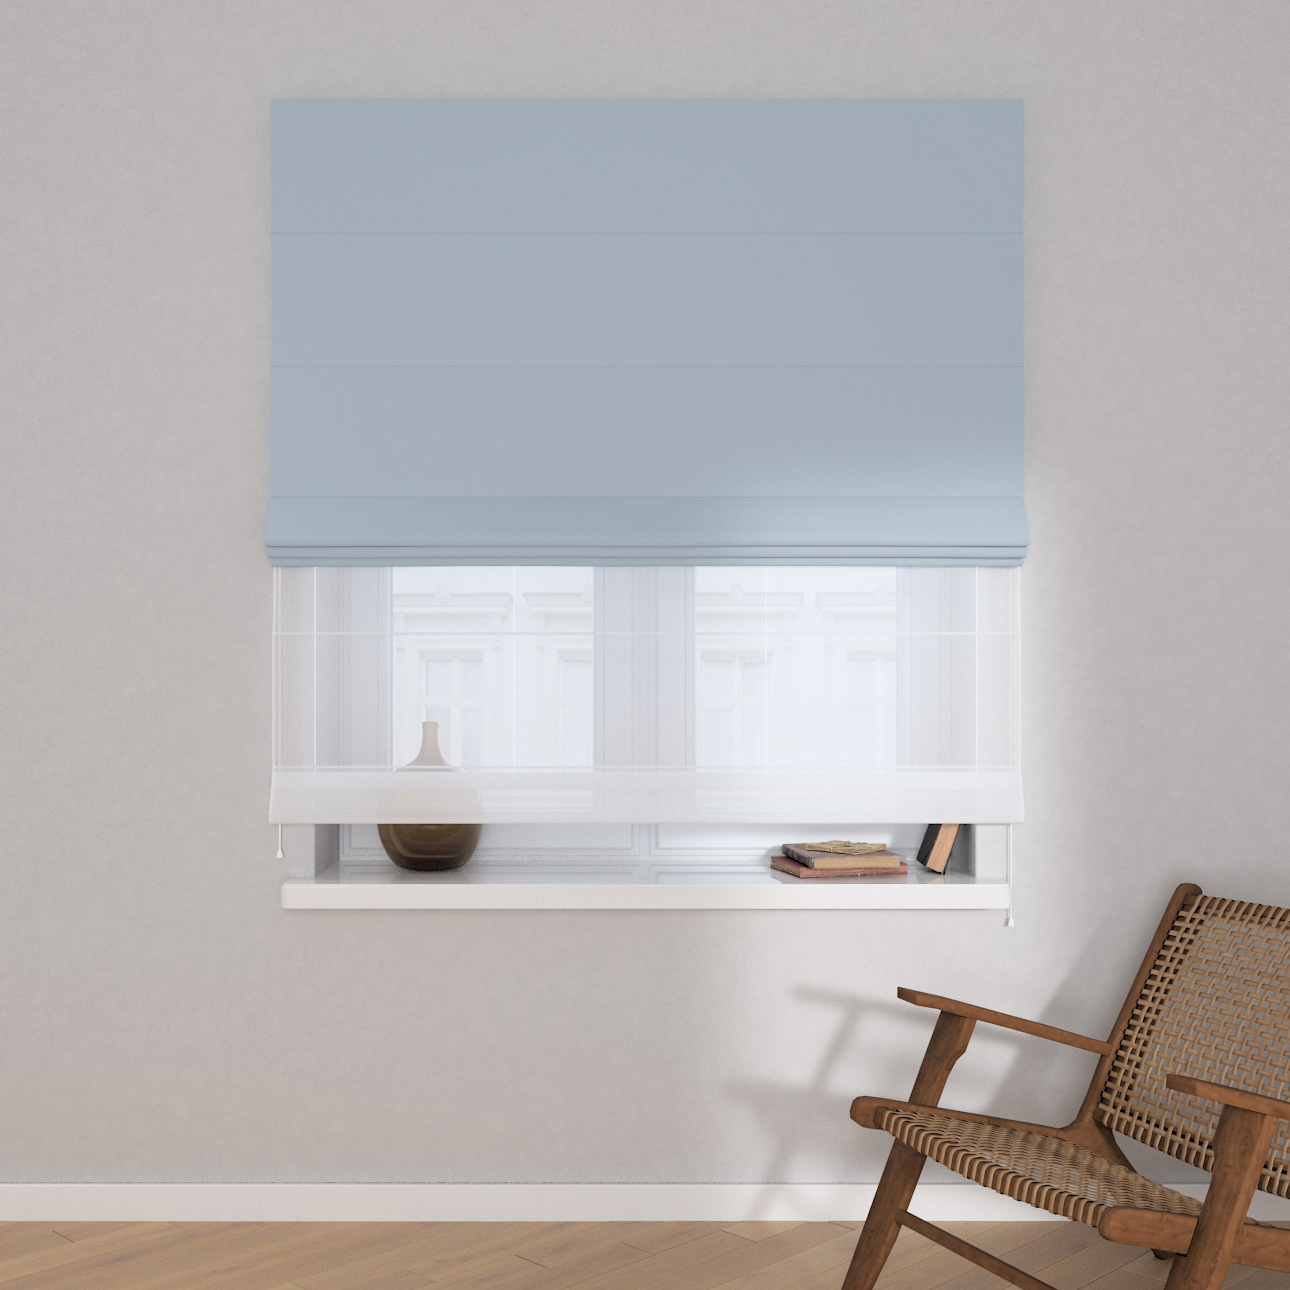 Dekoria Doppelraffrollo Duo, blau-grau, 130 x 170 cm günstig online kaufen